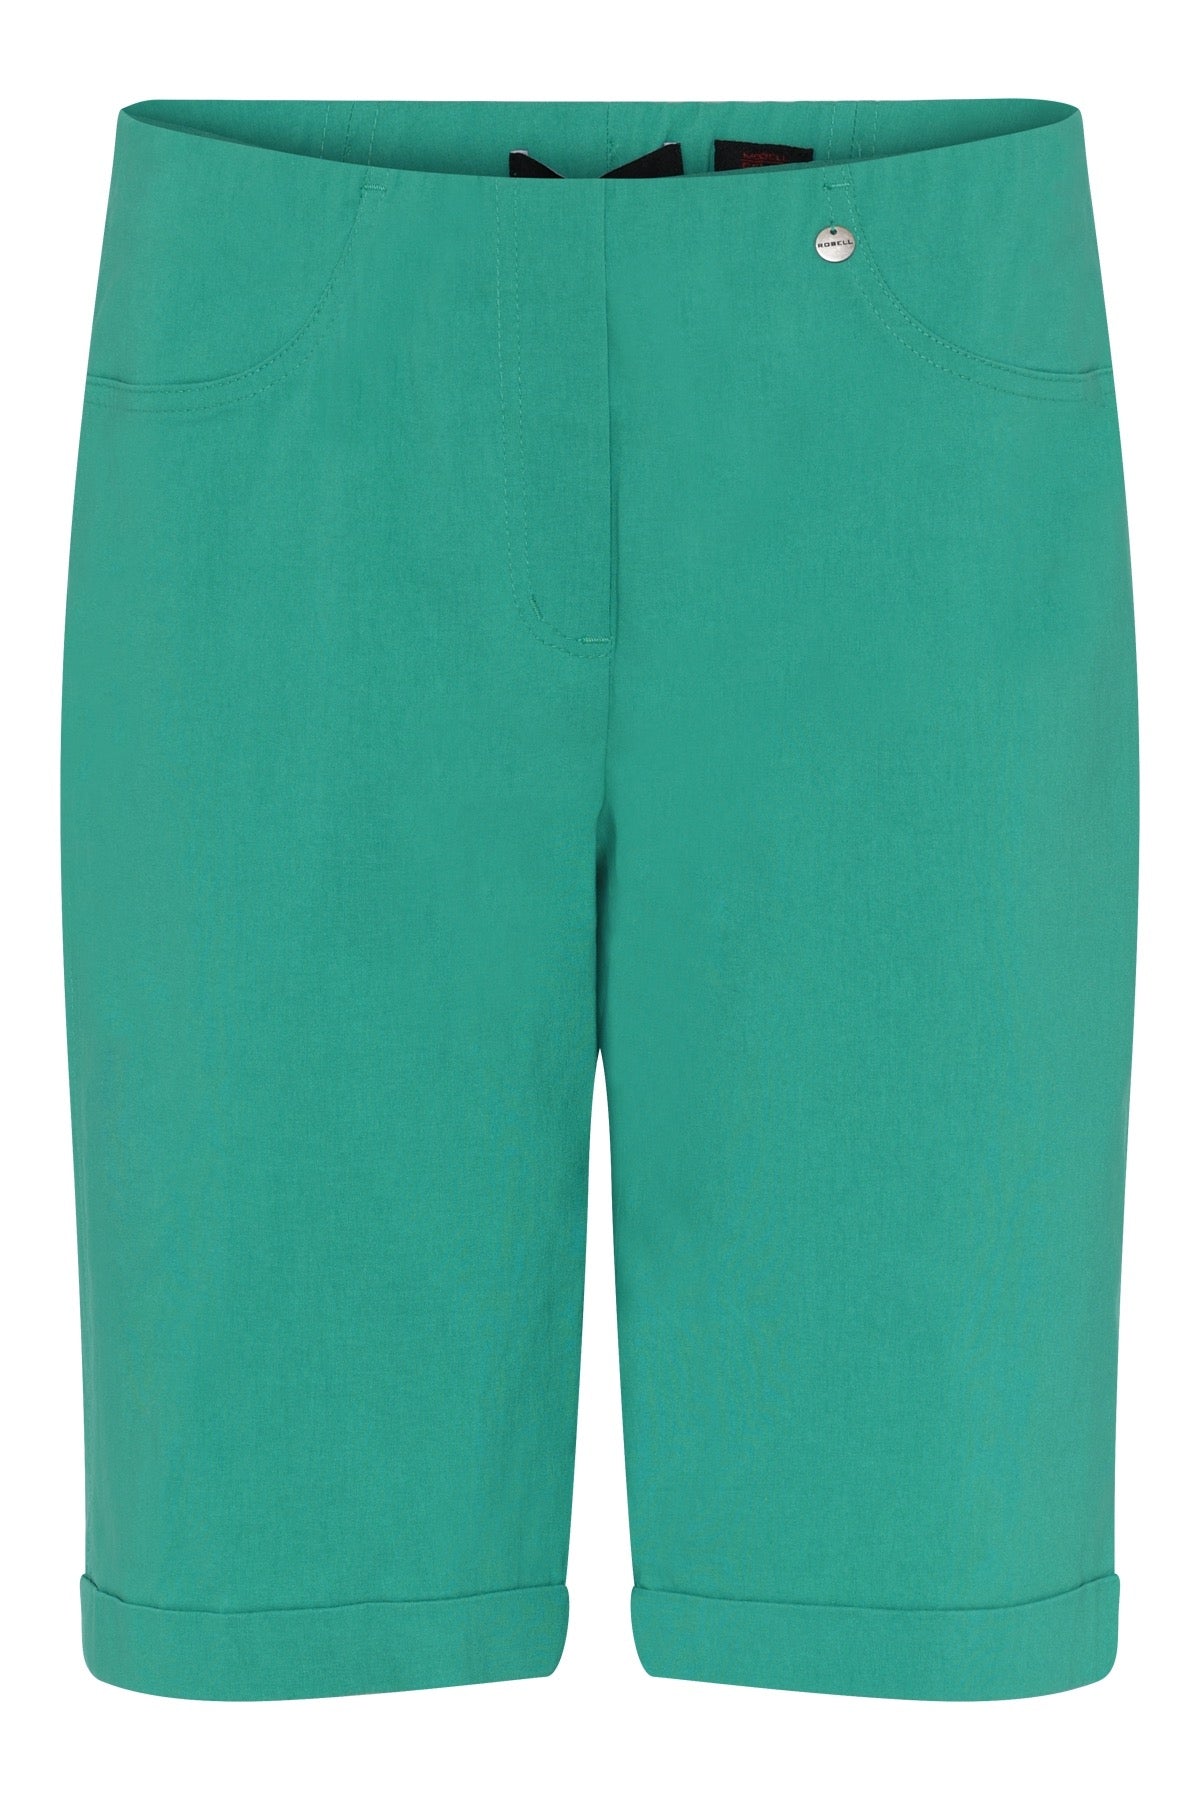 Turquoise "Bella 04" Shorts